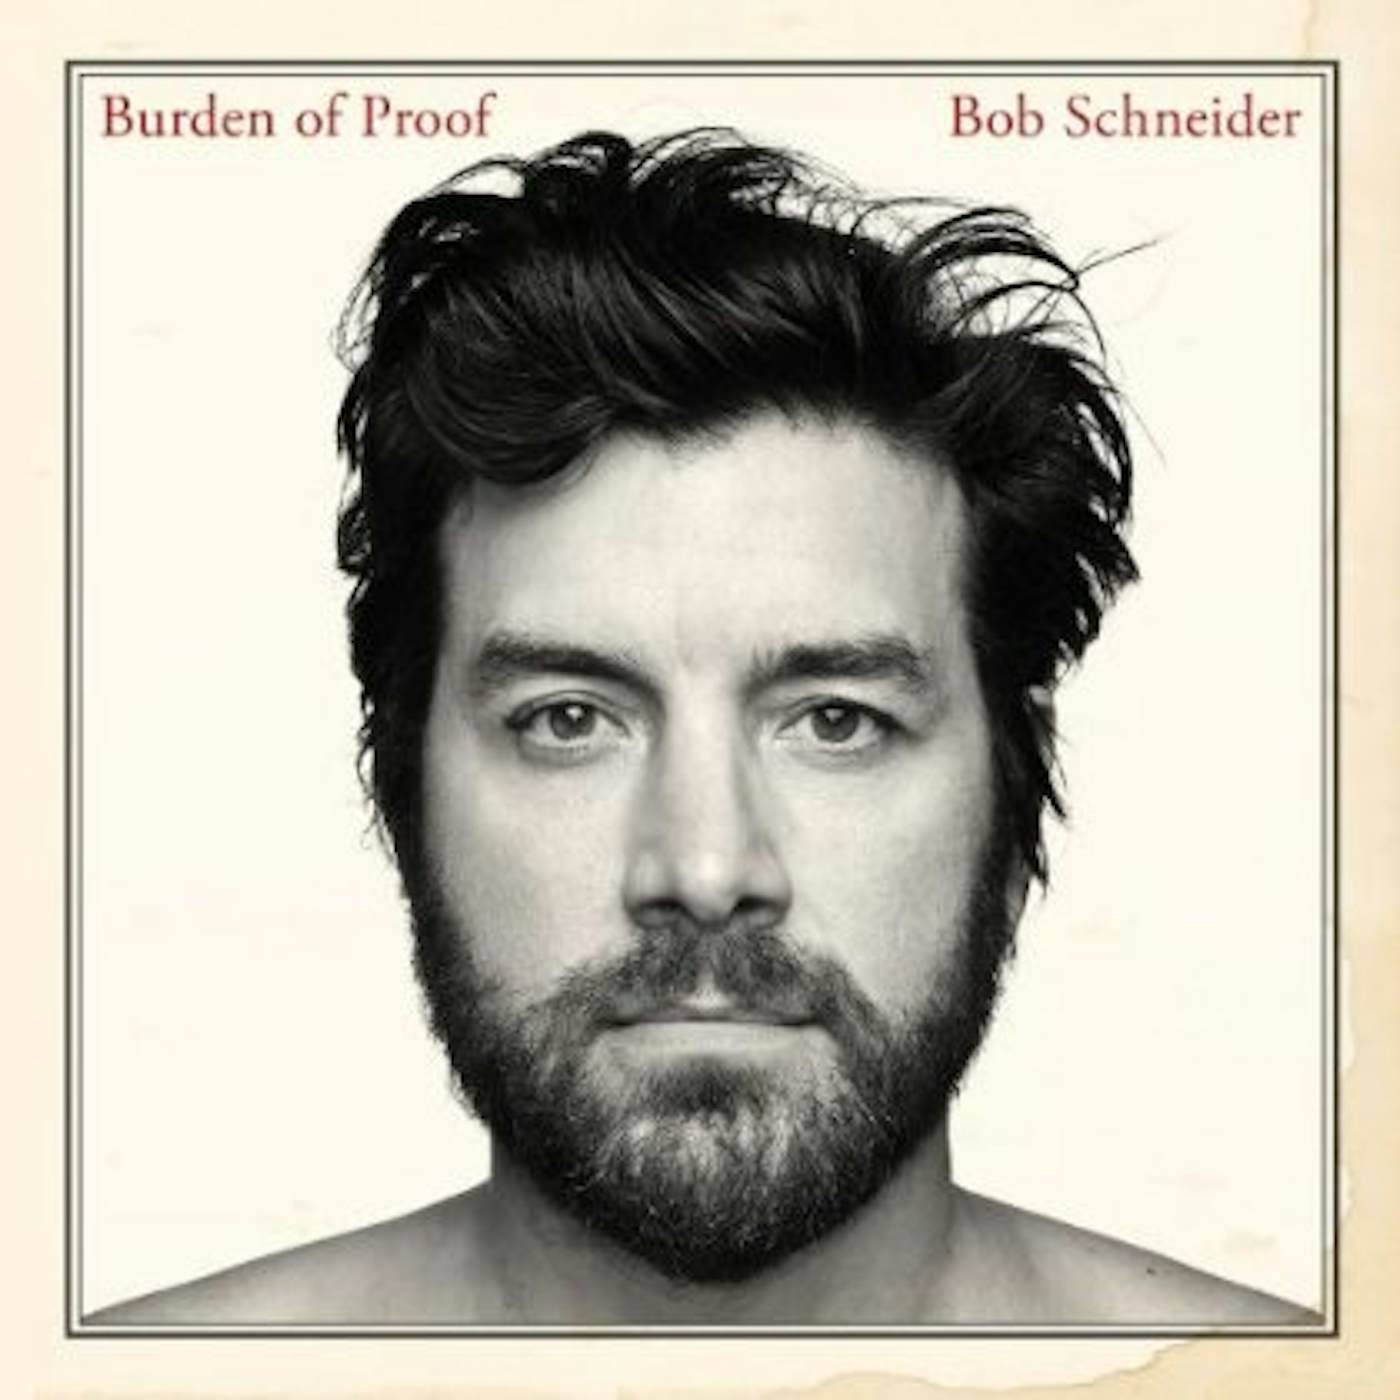 Bob Schneider Burden of Proof Vinyl Record